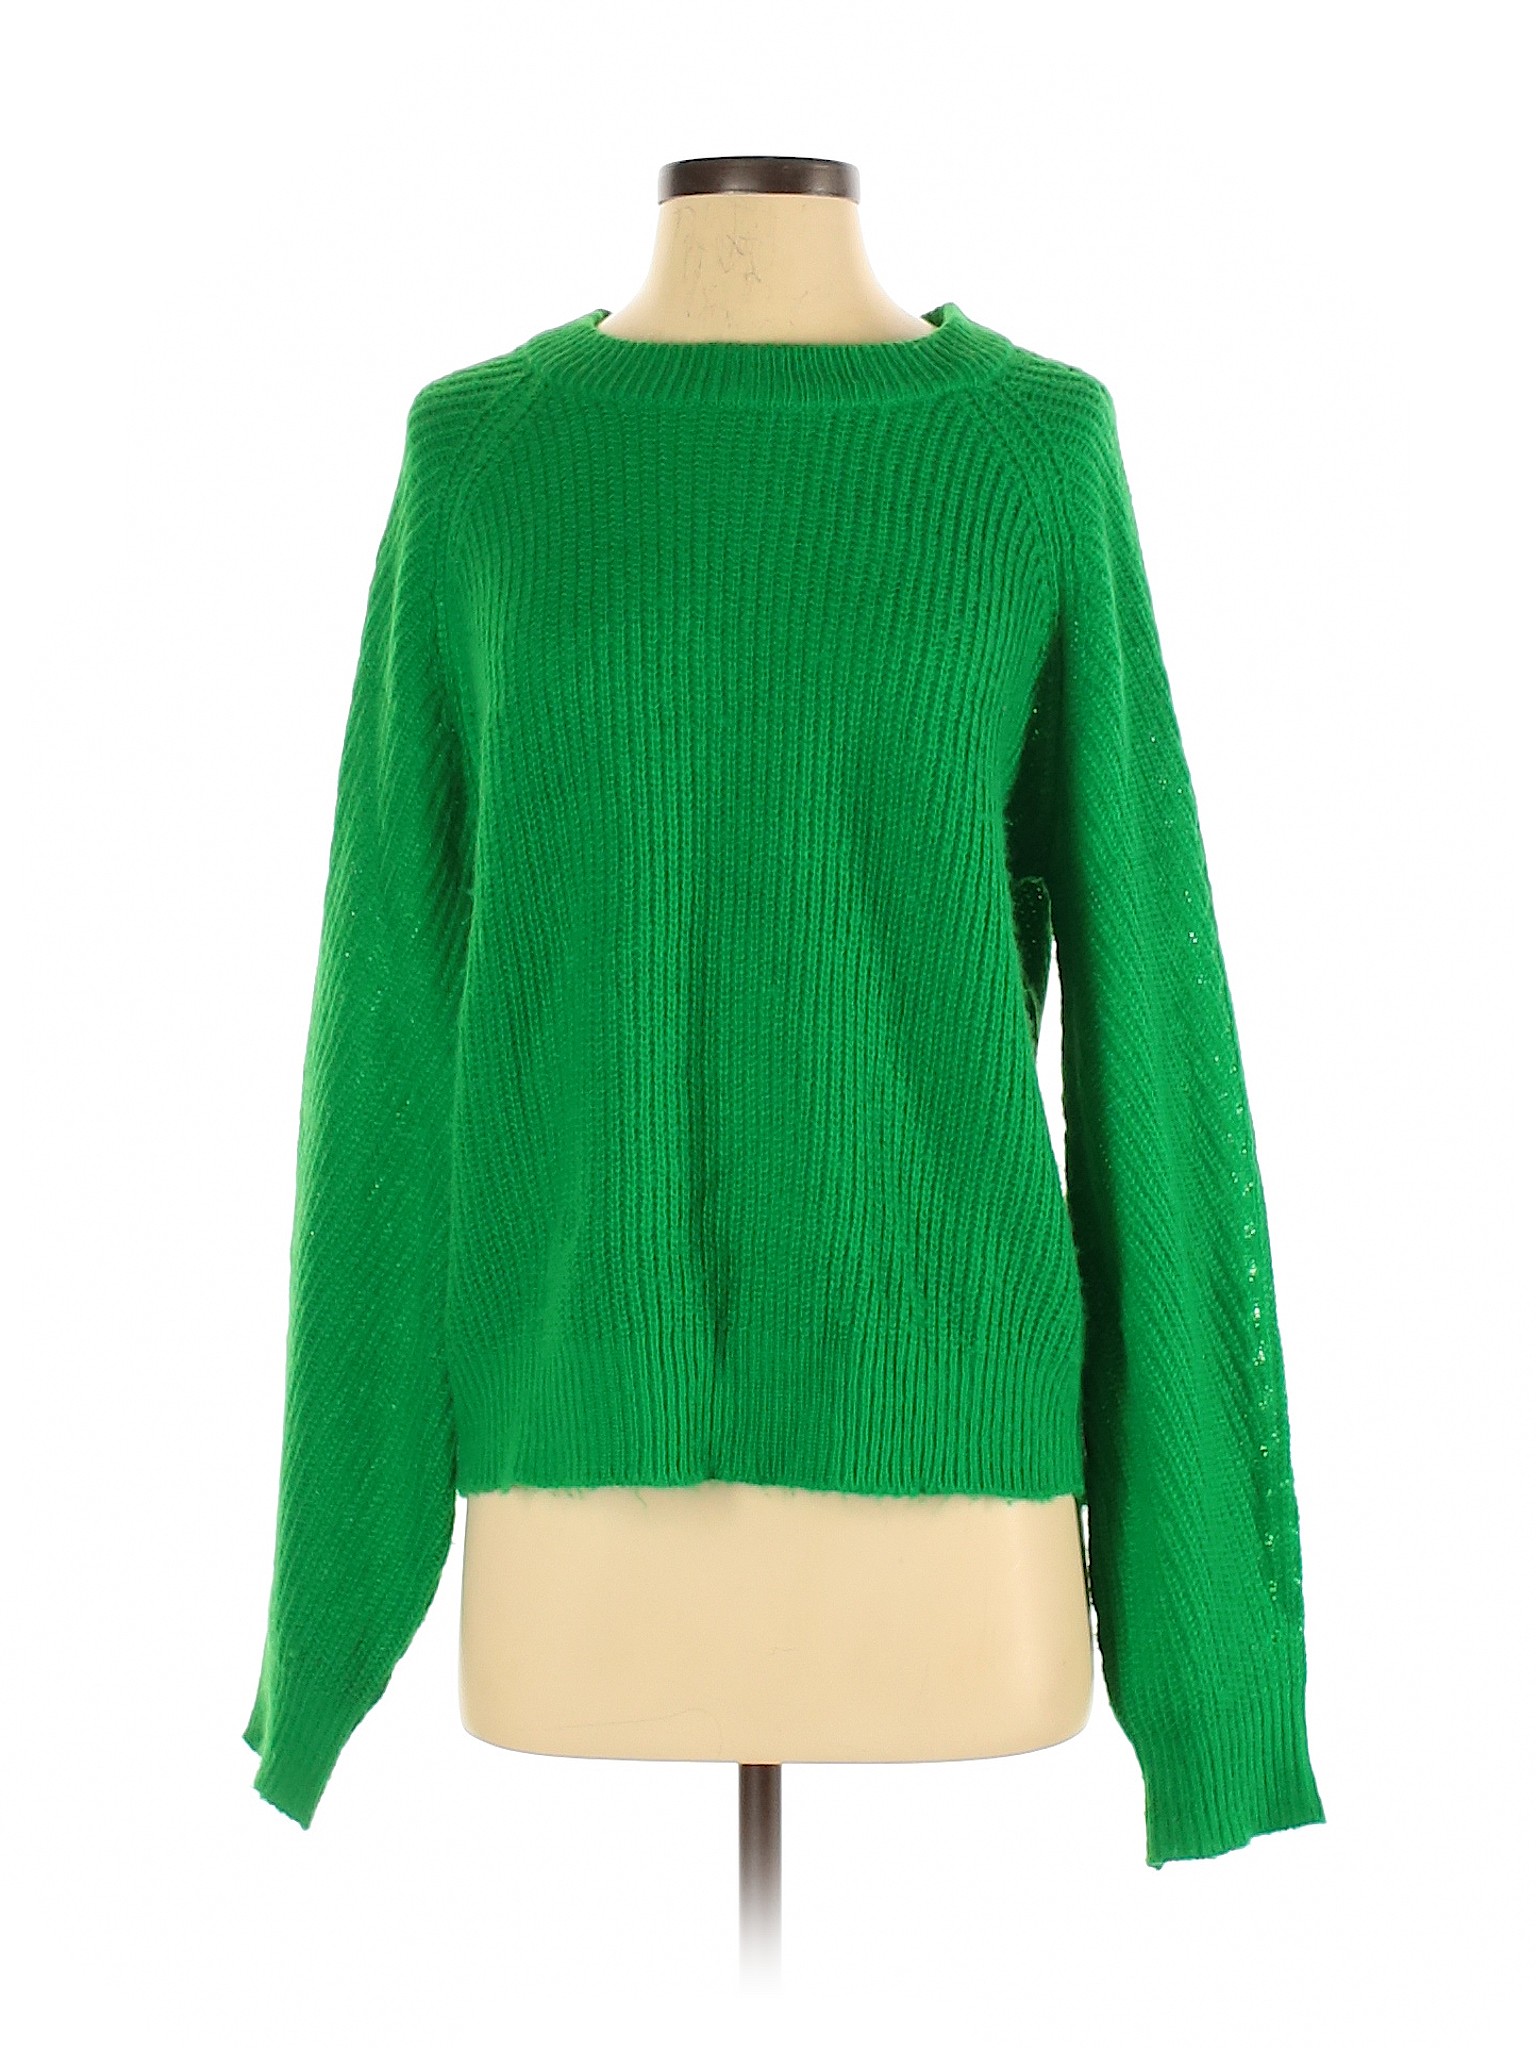 H&M Women Green Pullover Sweater S Petites | eBay